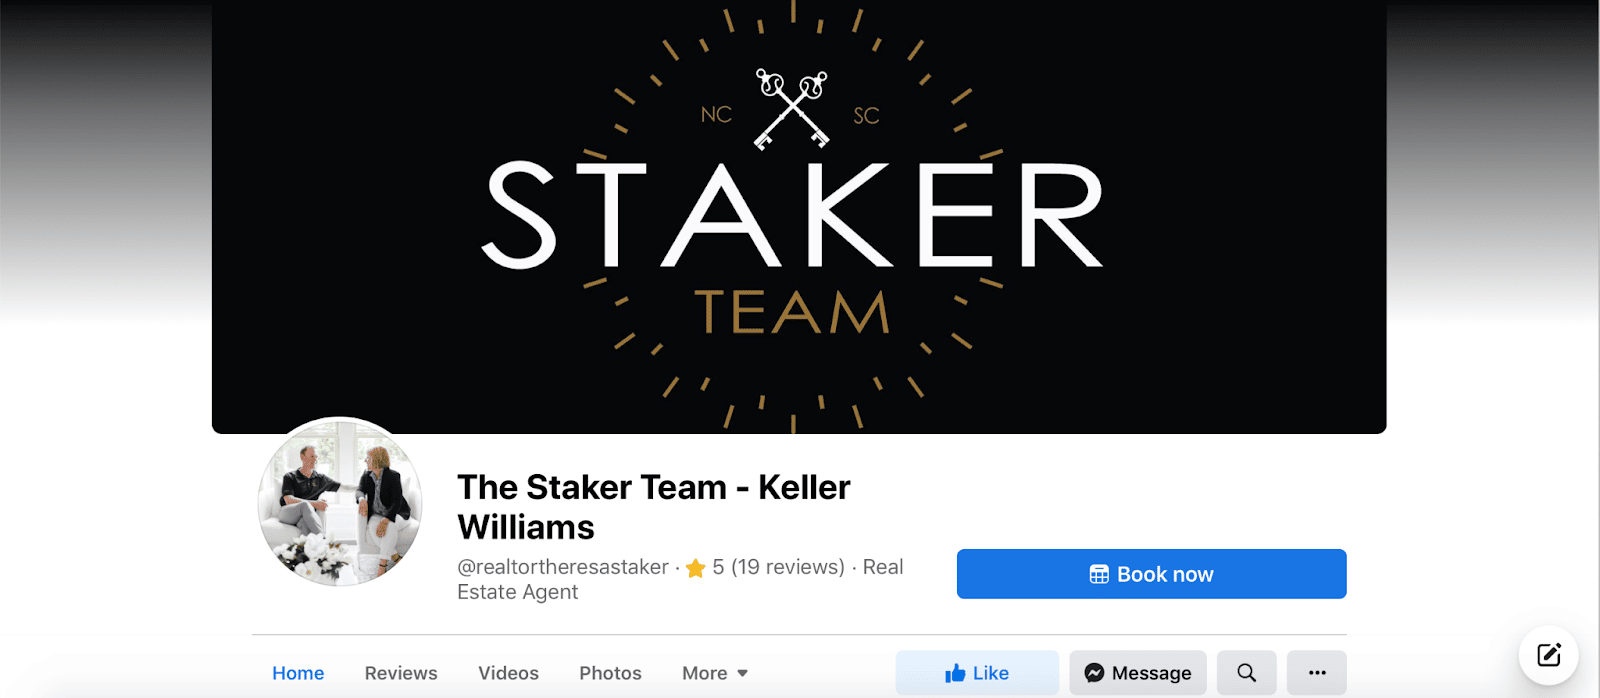 the-staker-team-keller-facebook-page